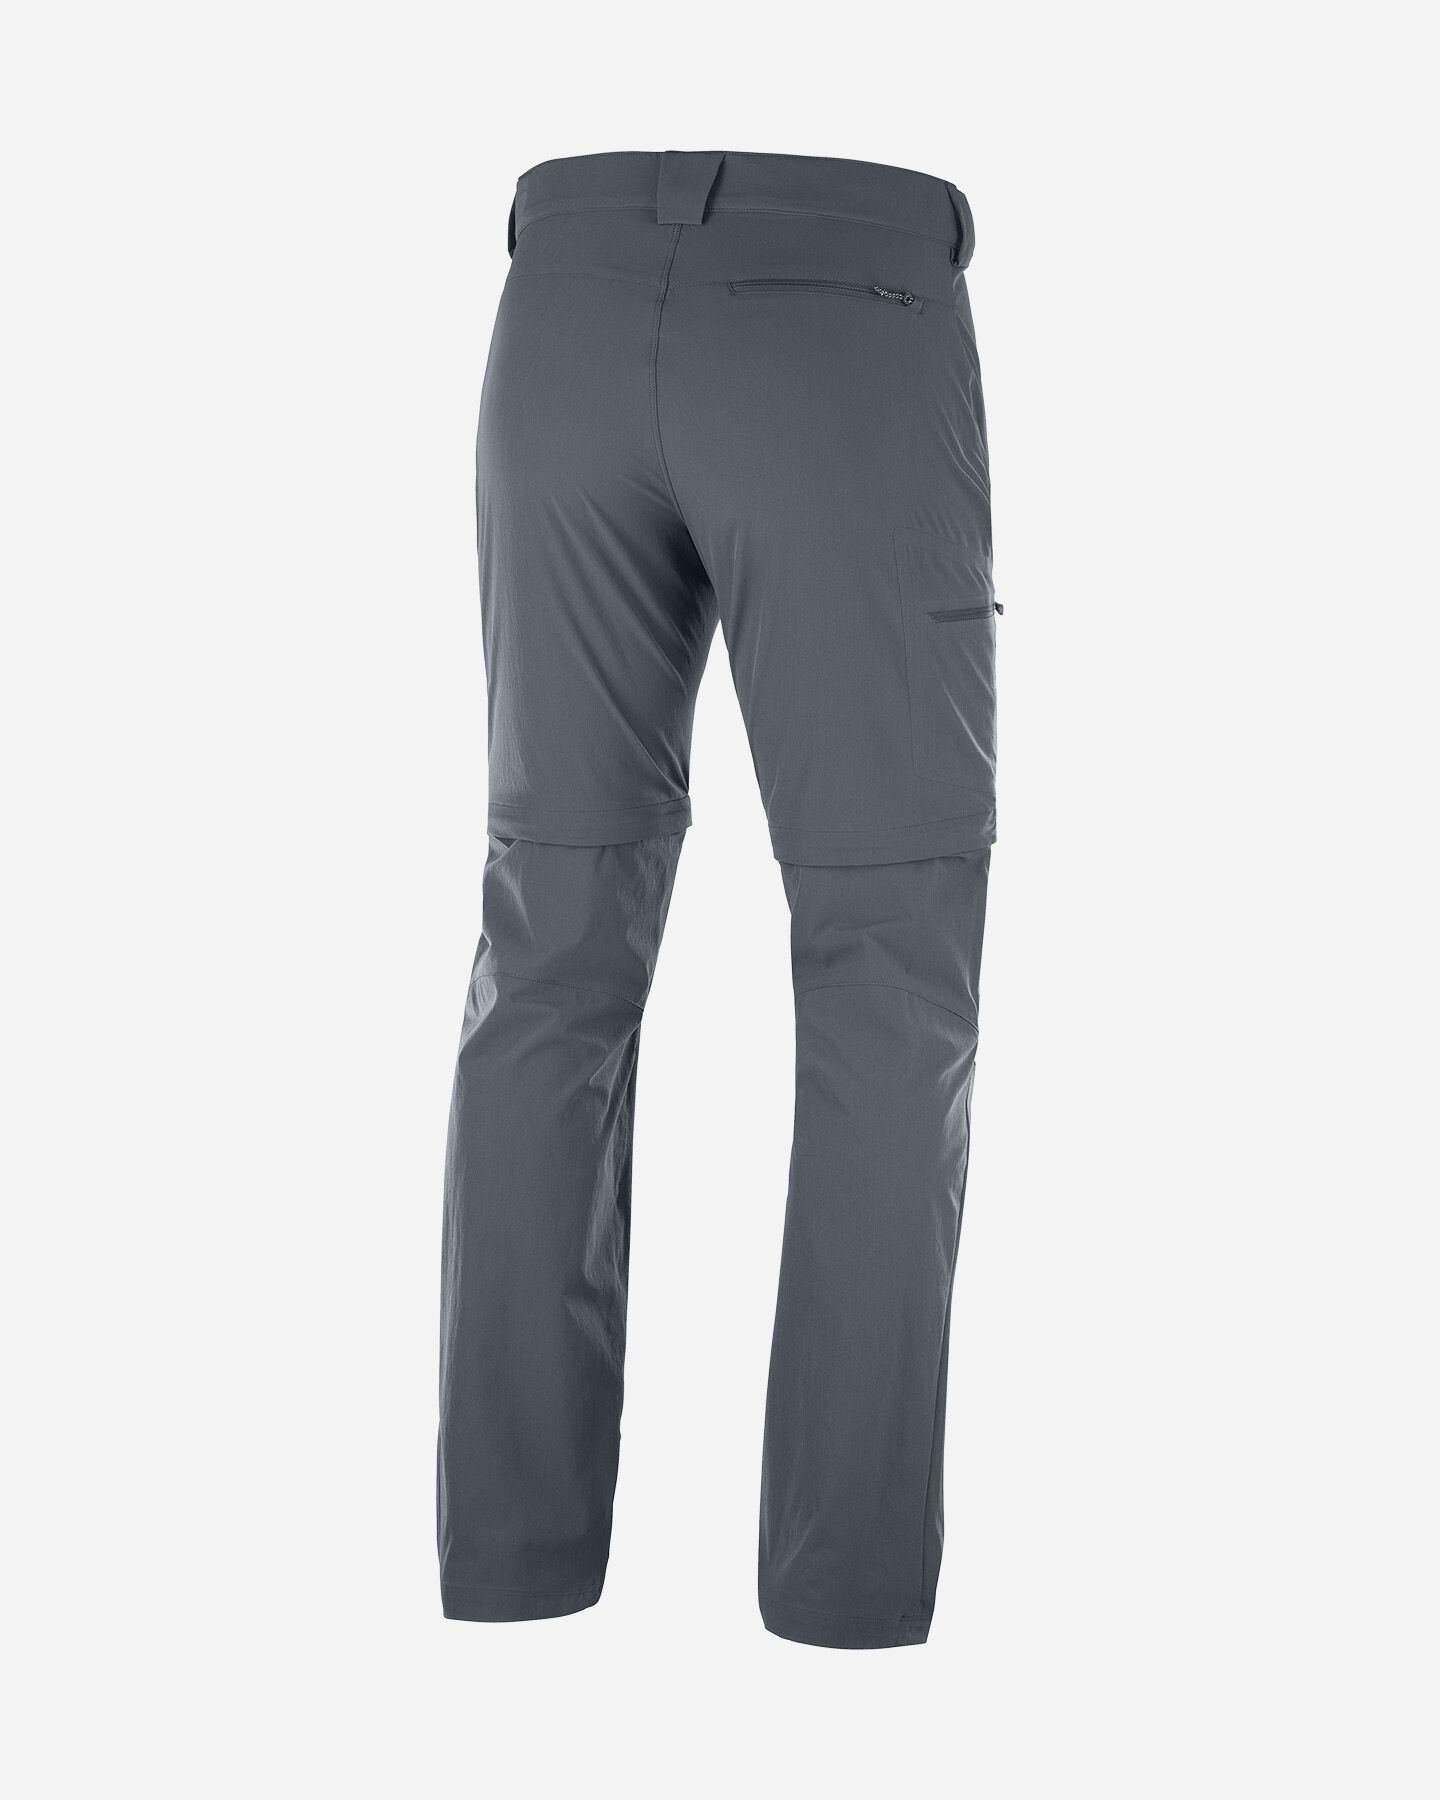  Pantalone outdoor SALOMON WAYFARER ZIP M S5173951|UNI|46 scatto 2